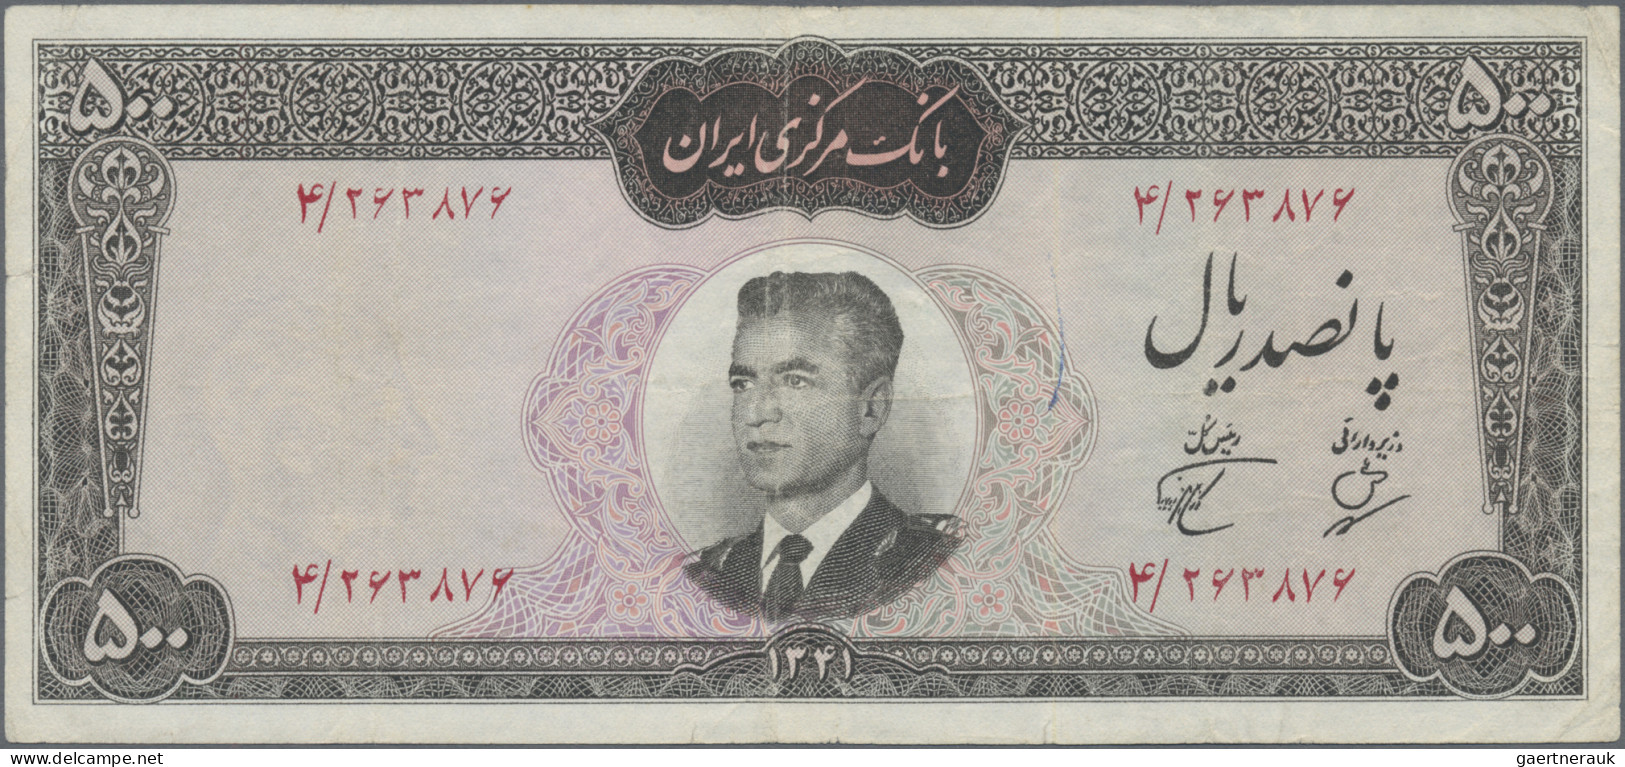 Iran: Bank Markazi Iran, lot with 6 banknotes, series ND(1961, 1962), with 2x 10